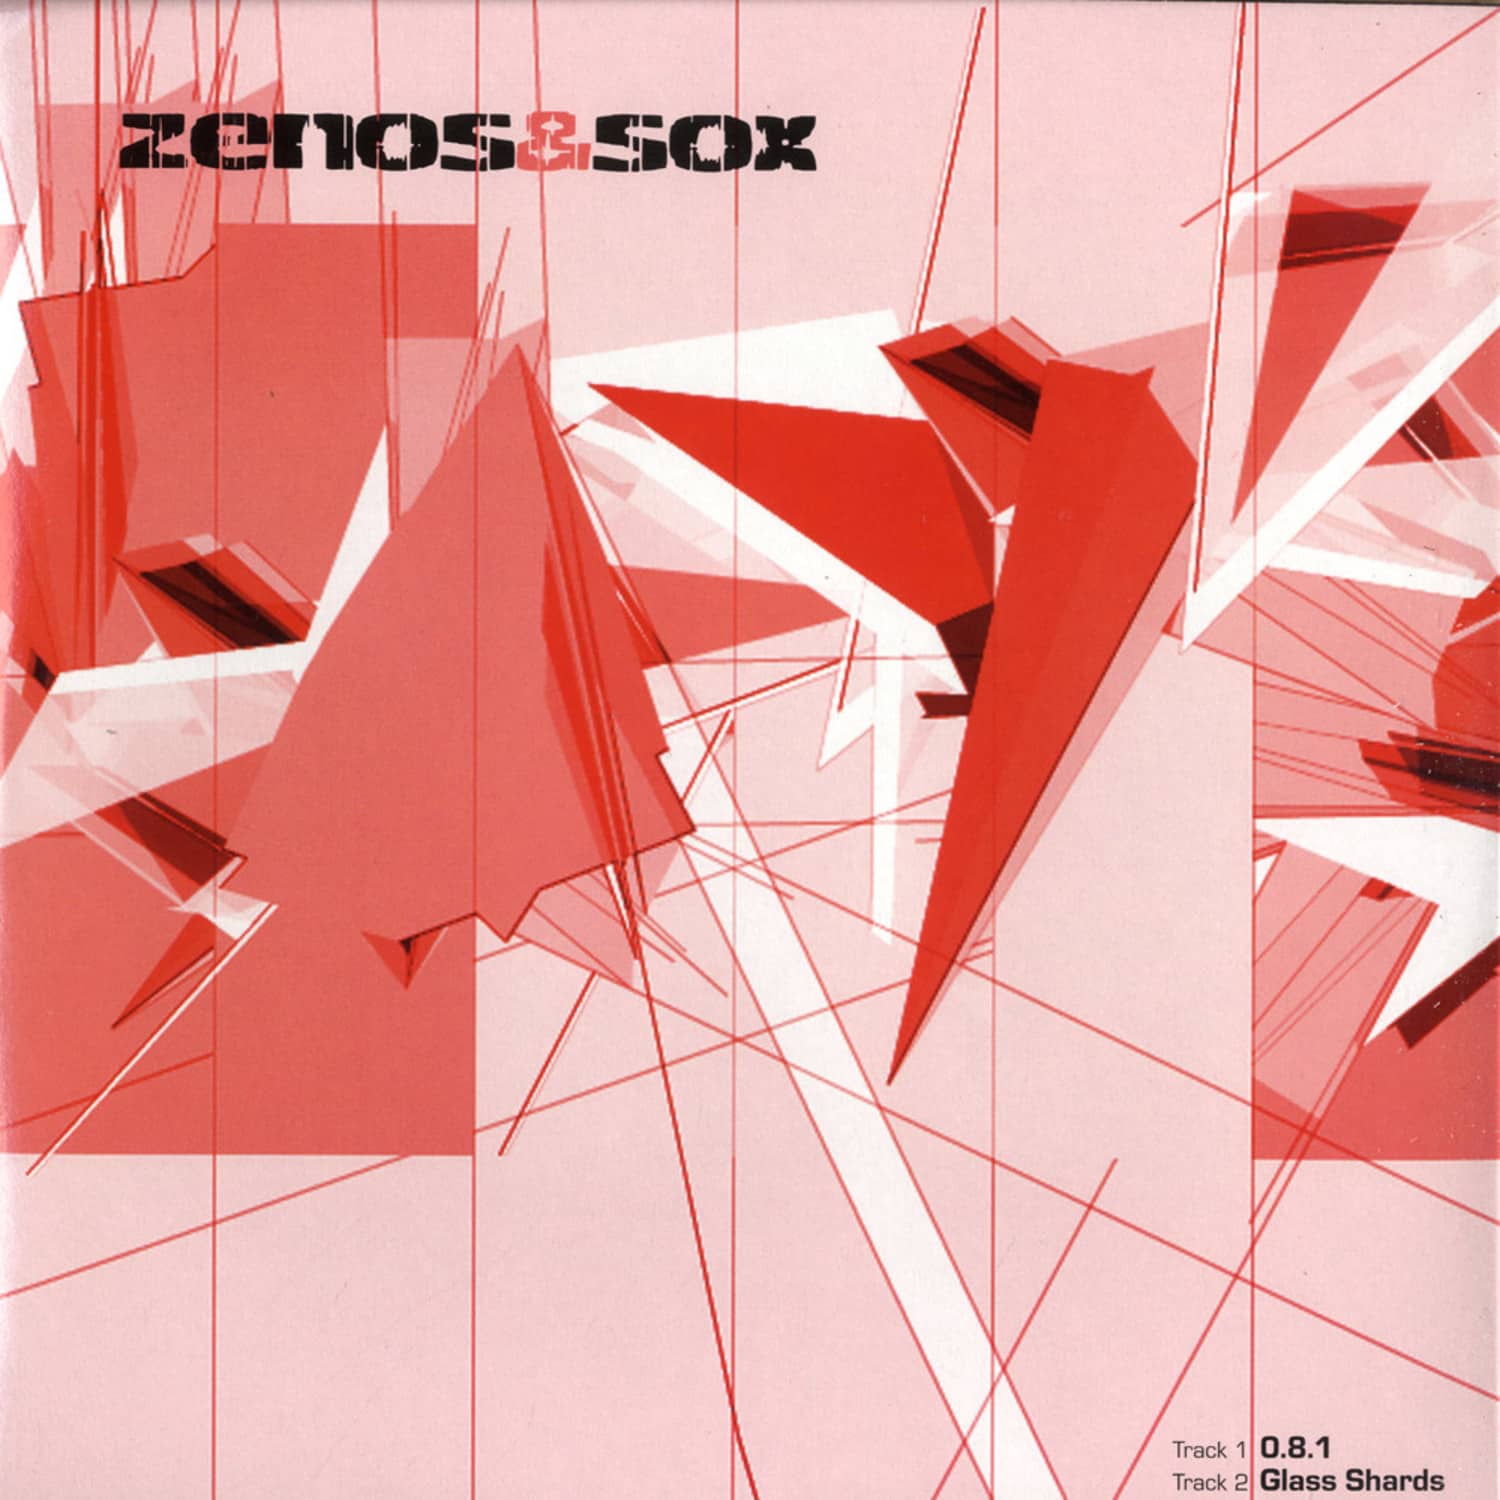 Zenos & Sox - 0.8.1. / GLASS SHARDS